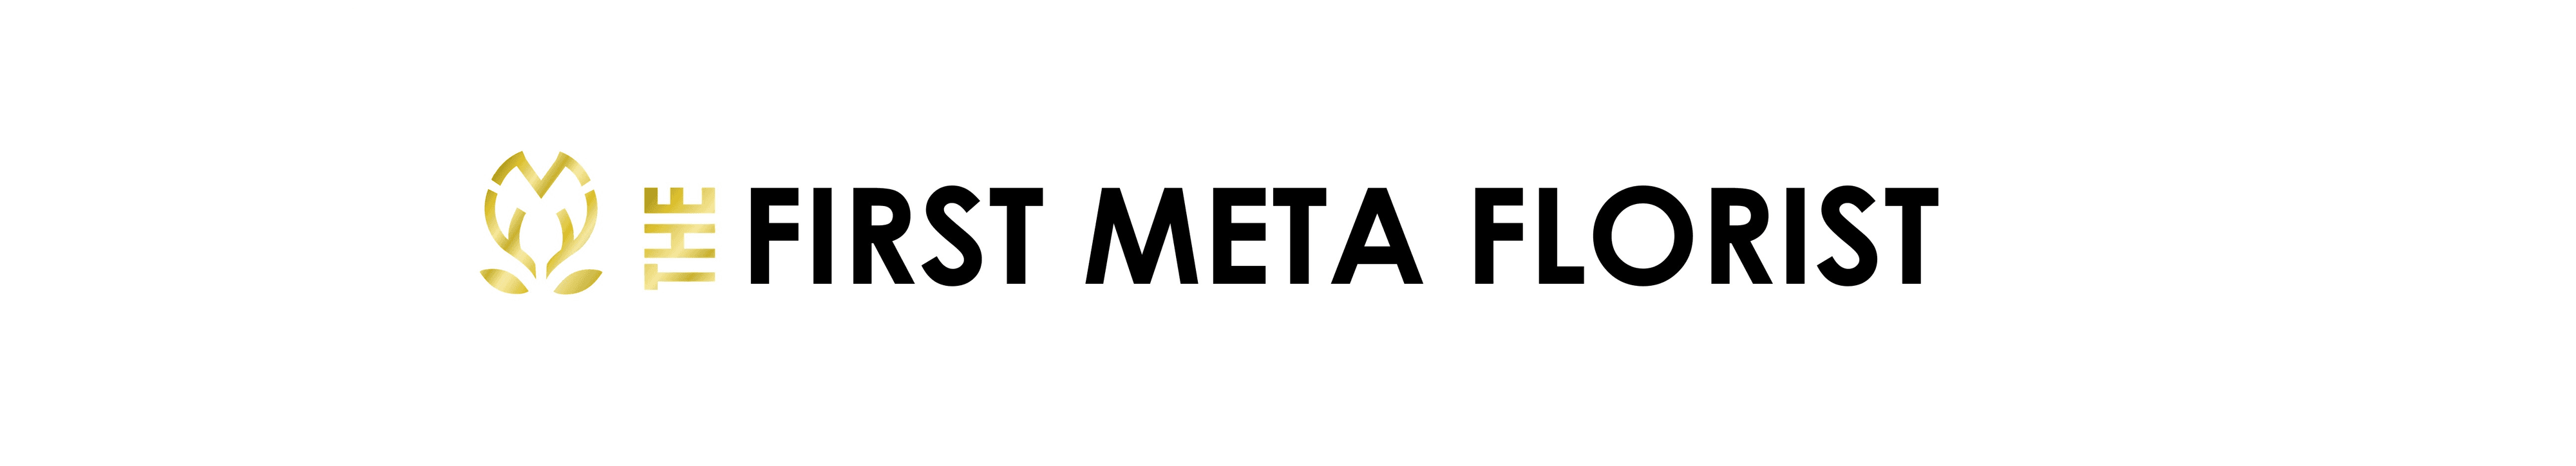 The_First_Meta_Florist banner